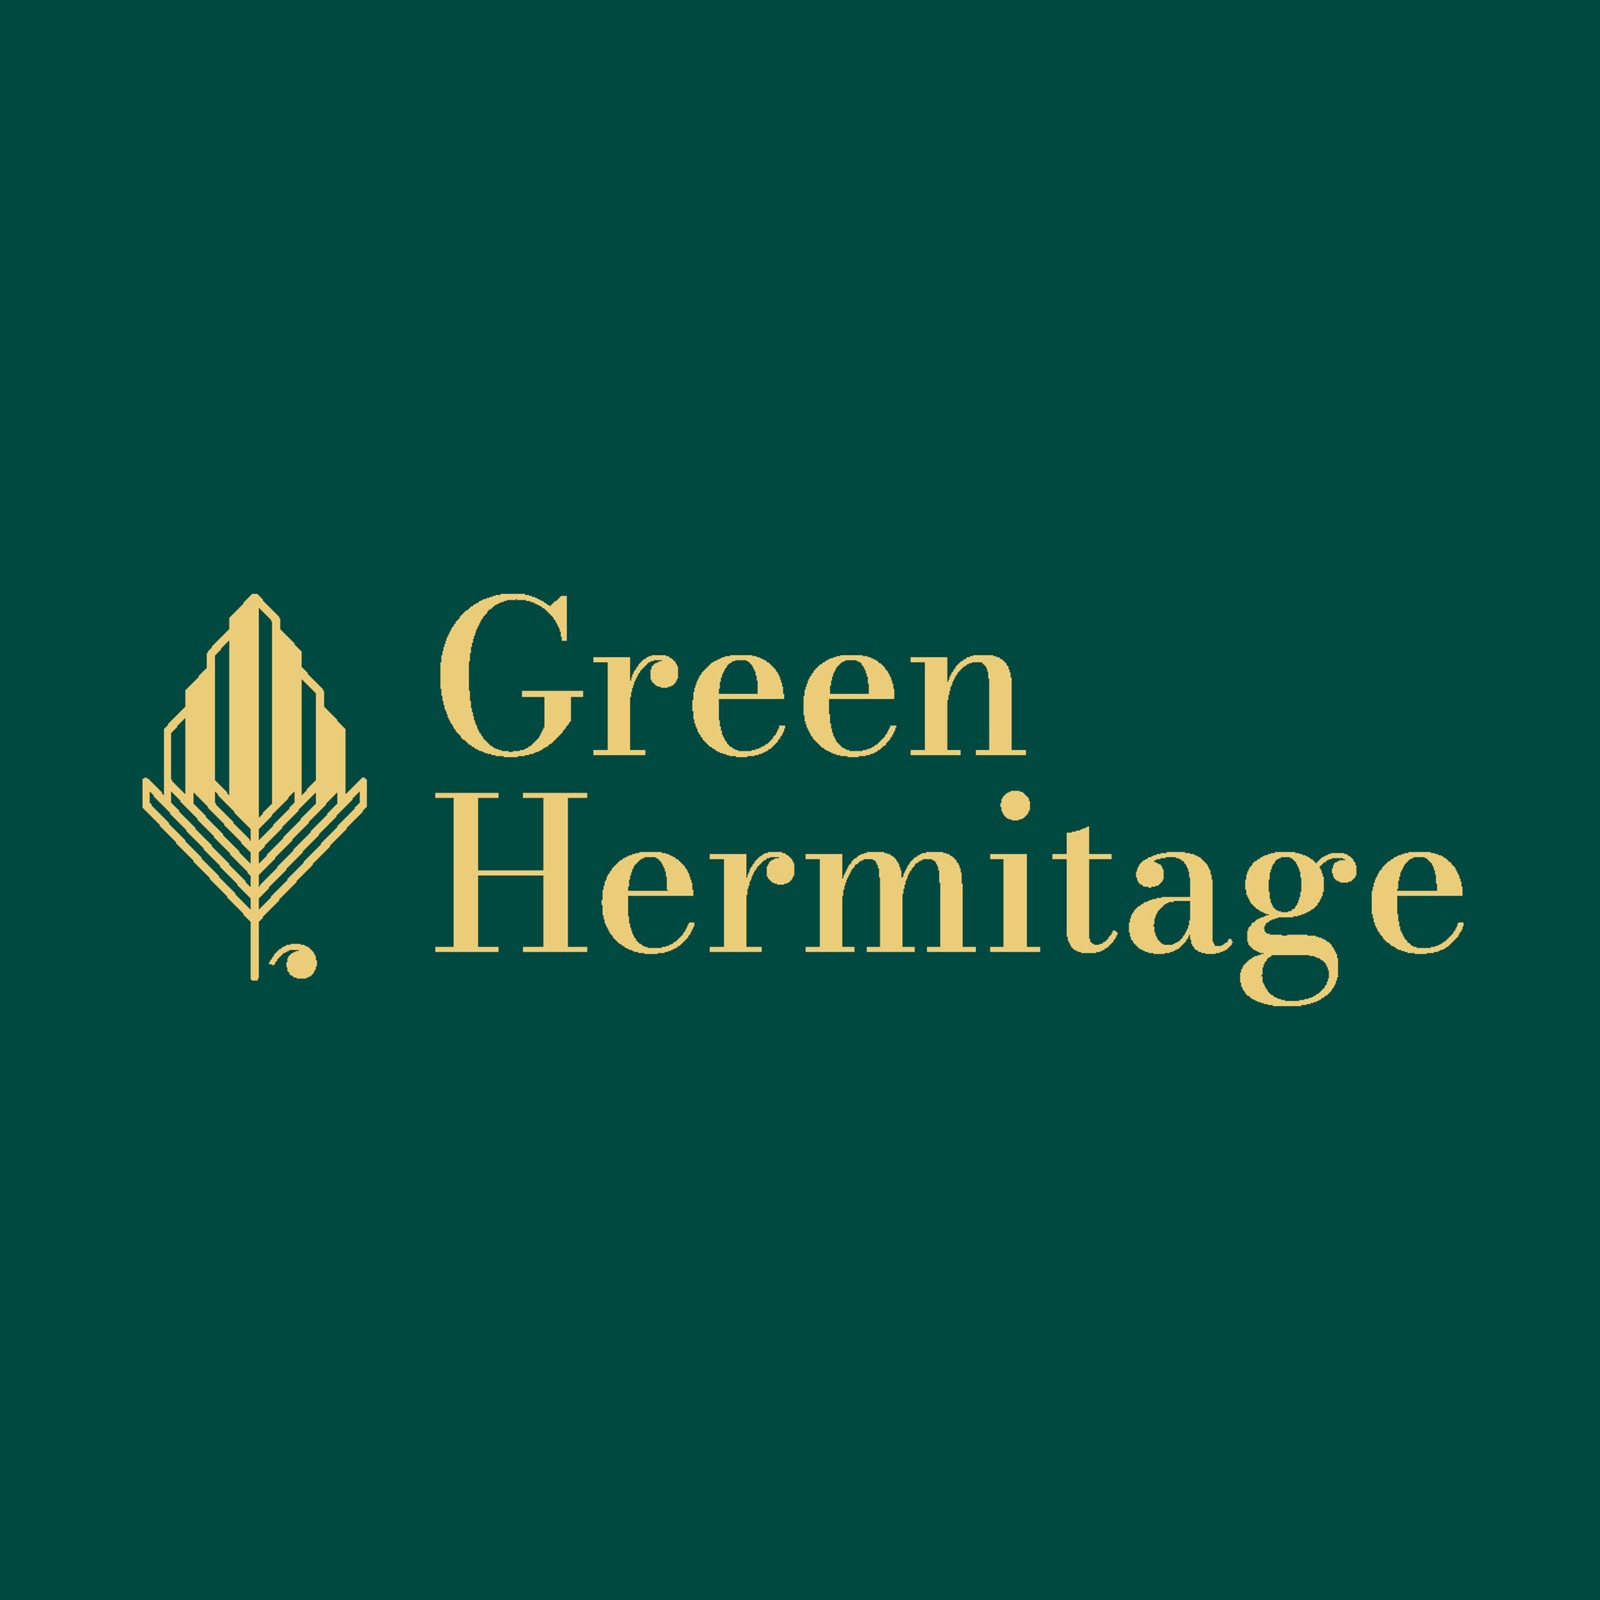 Green hermitage logo 